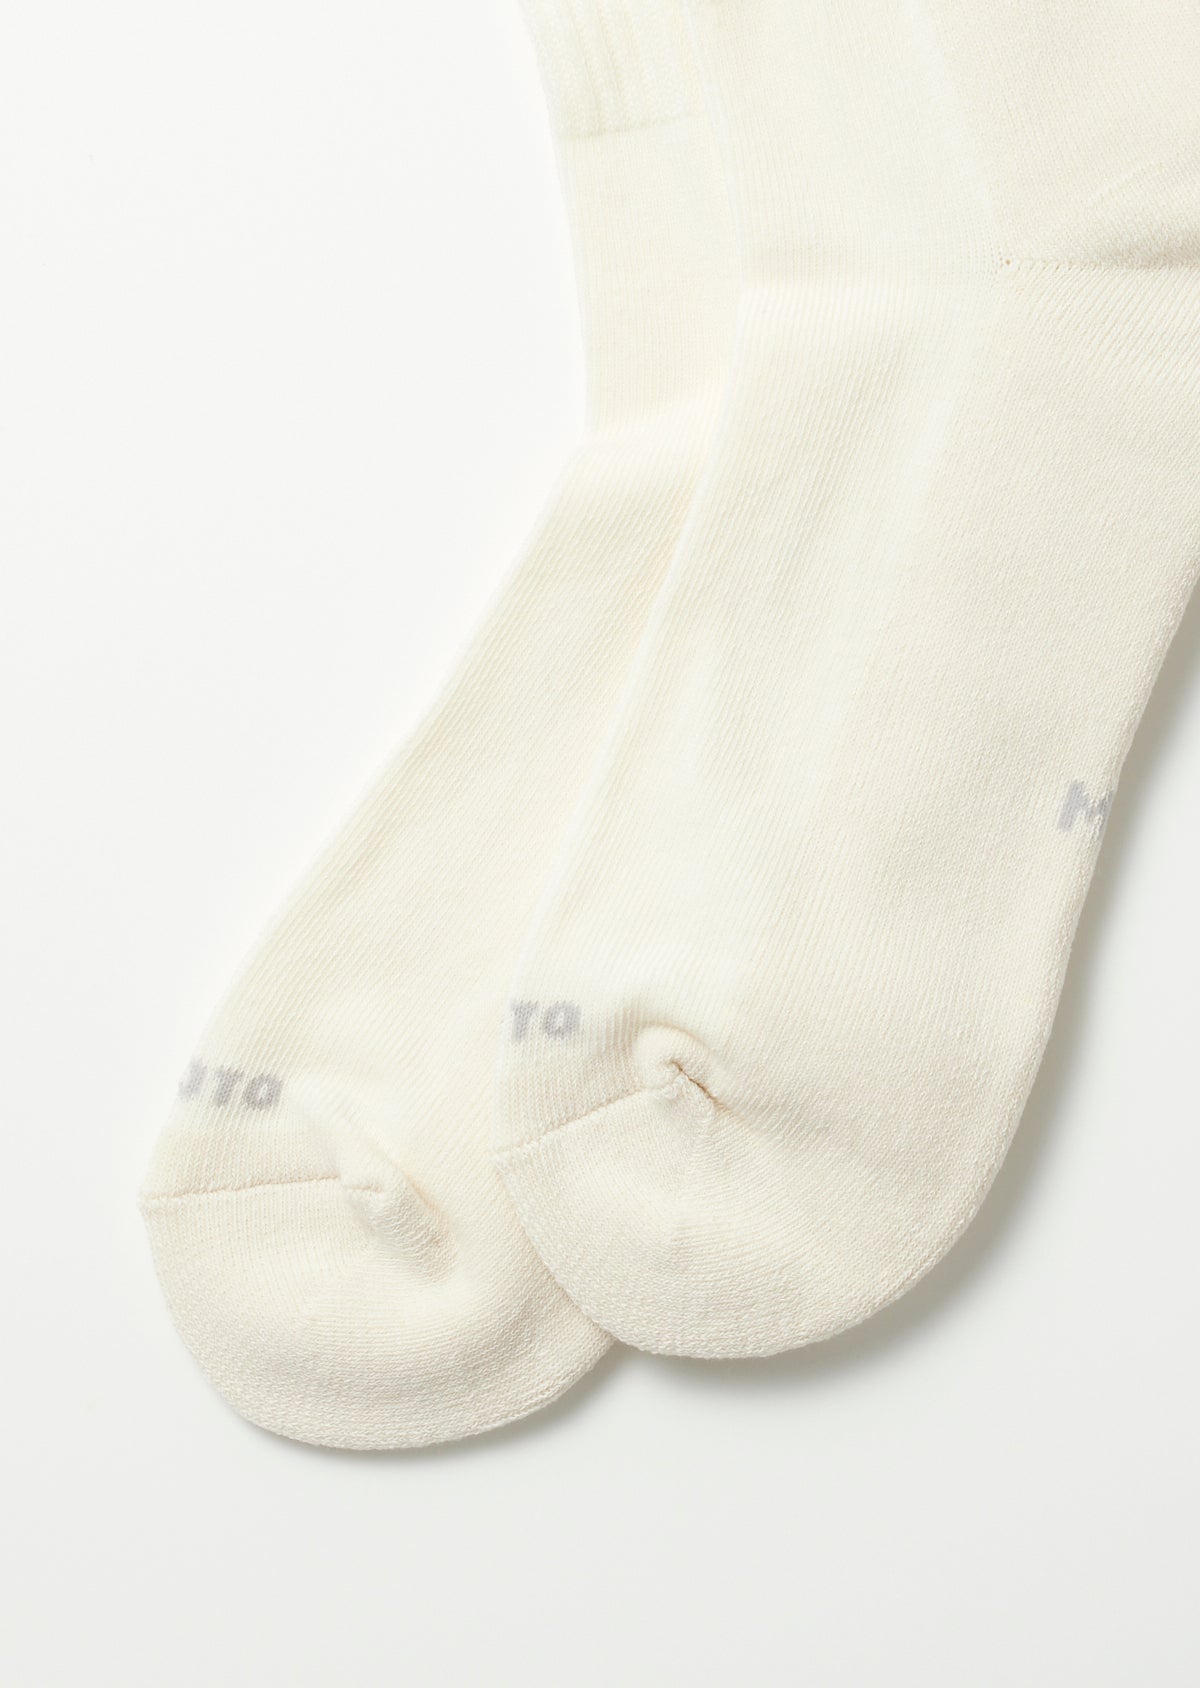 Double Layer Socken ecru / neongrün